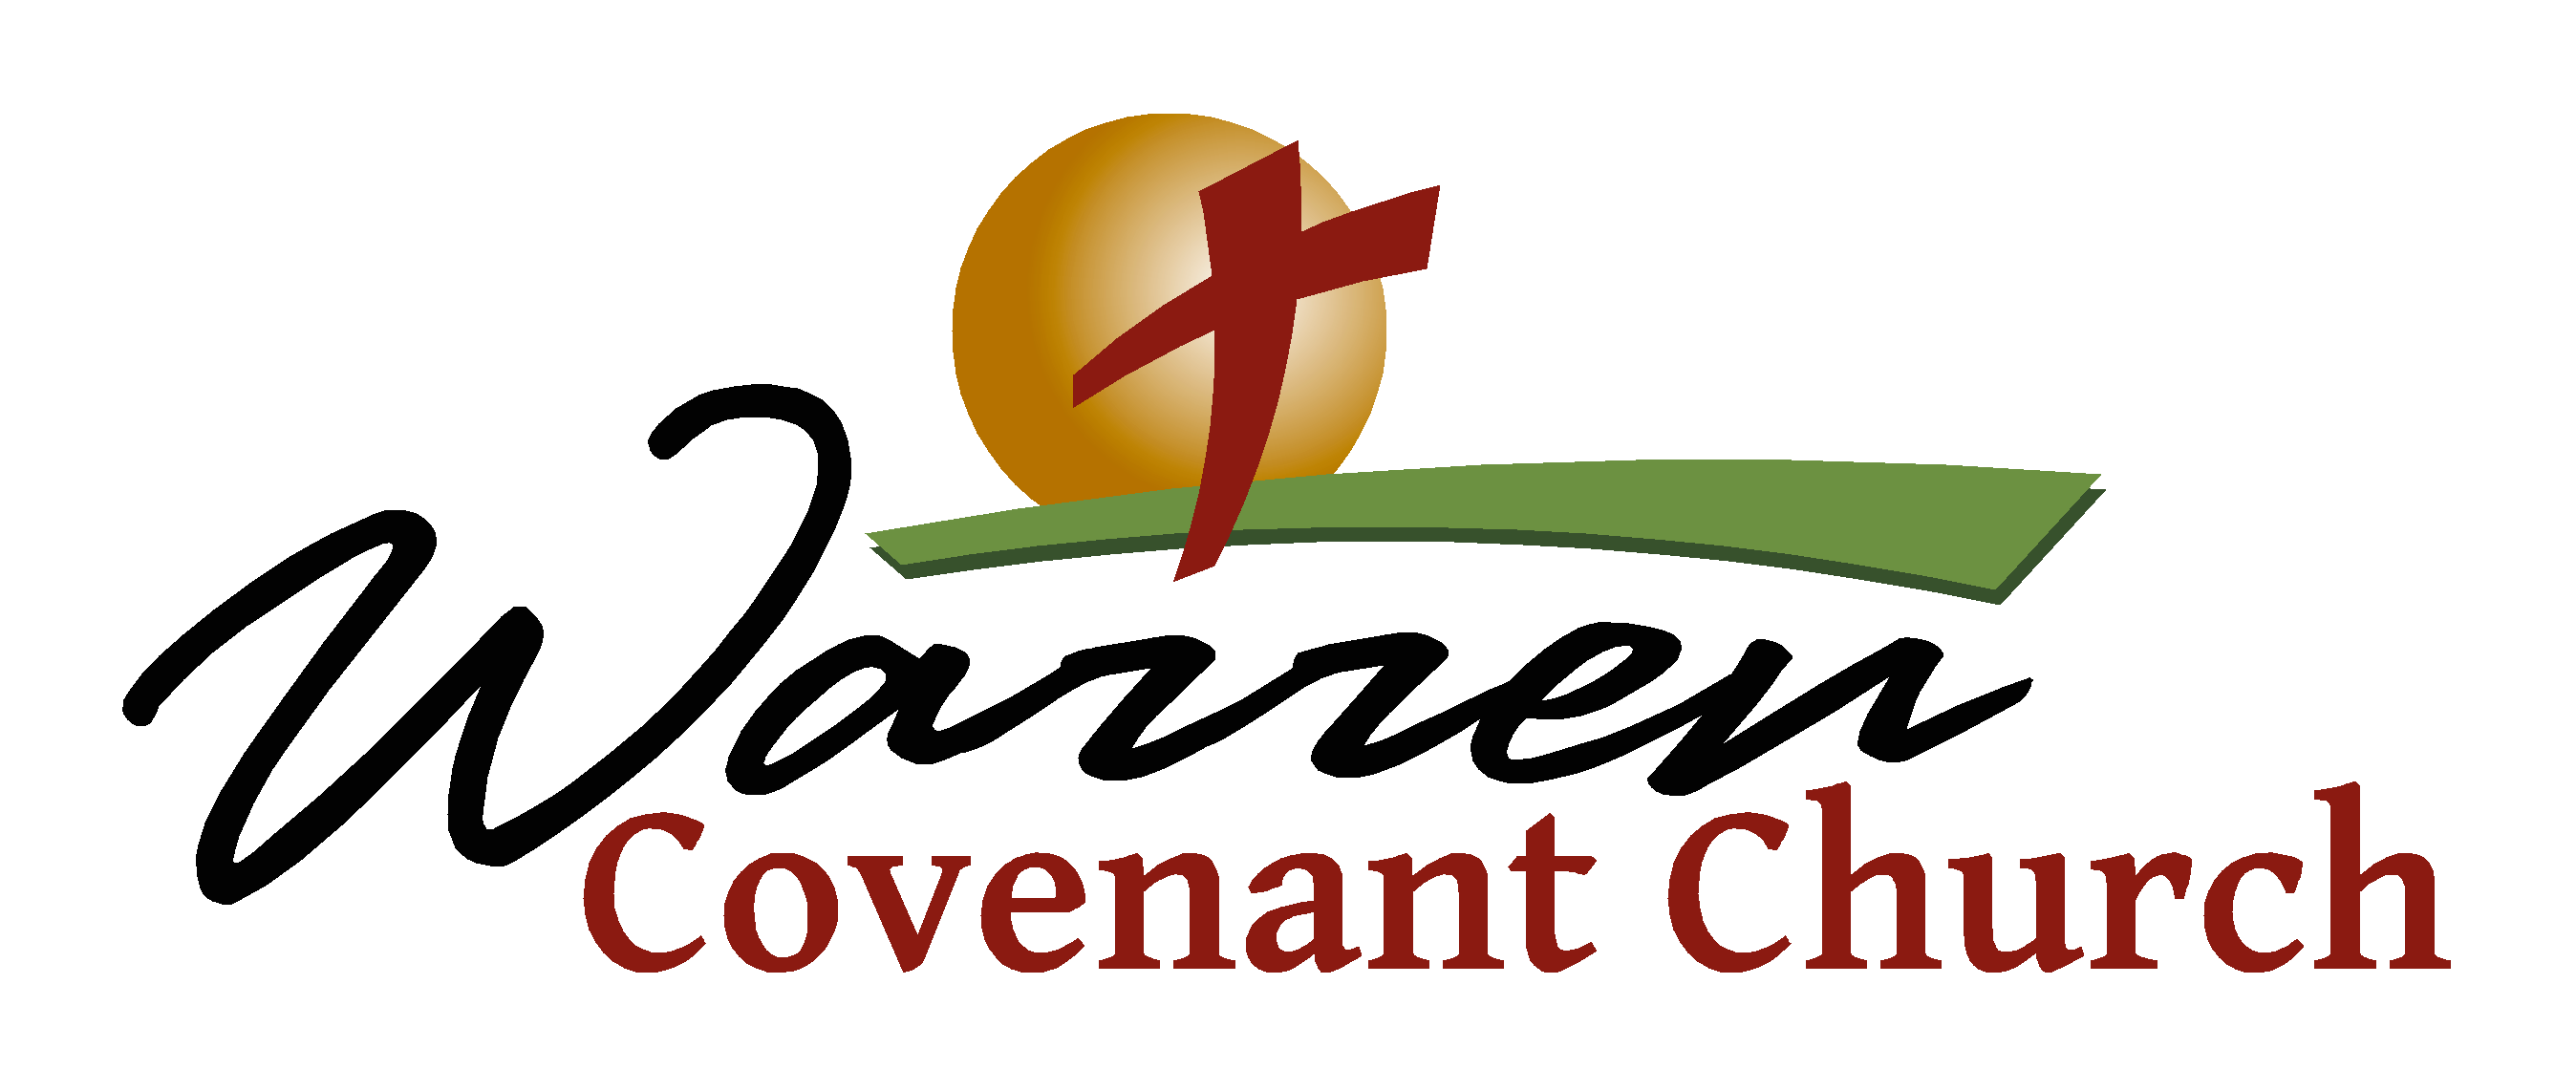 Warren Covenant Church